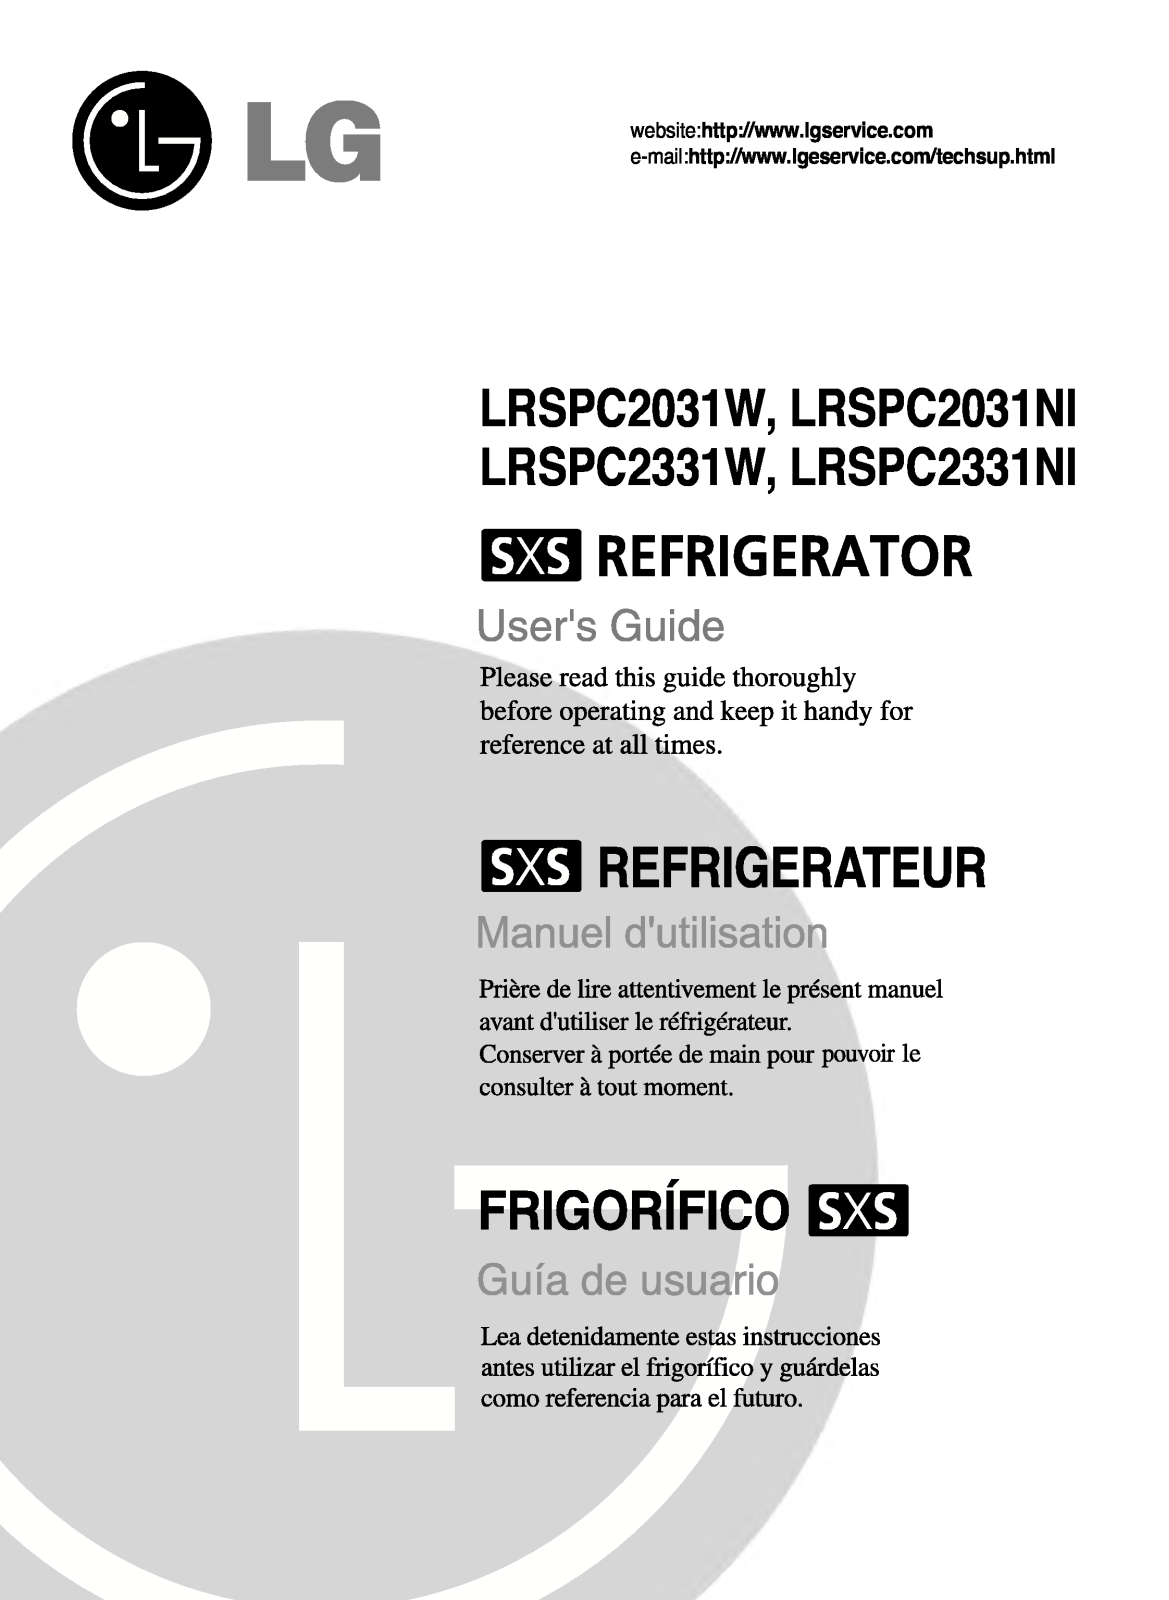 LG LRSPC2331BK, LRSPC2031T, LRSPC2031BK, LRSPC2031BS, LRSPC2331BS User Manual